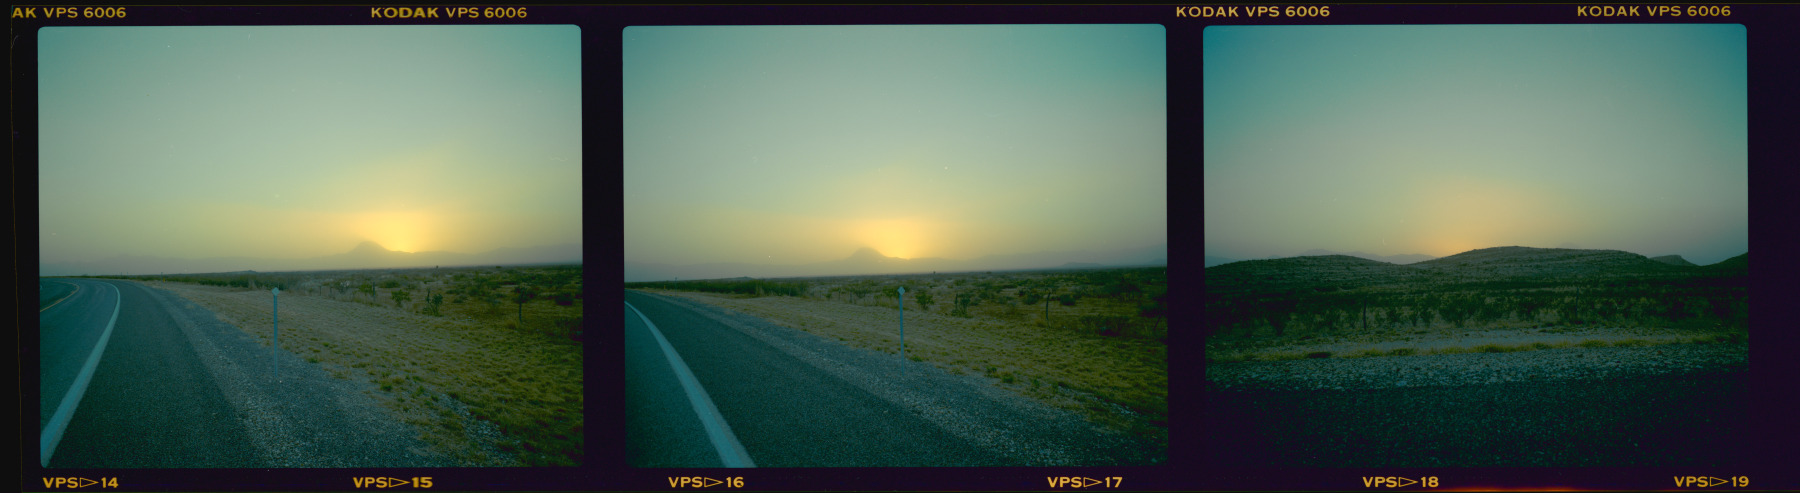 Terlingua-TX-1990-138-West-Texas-Road-2